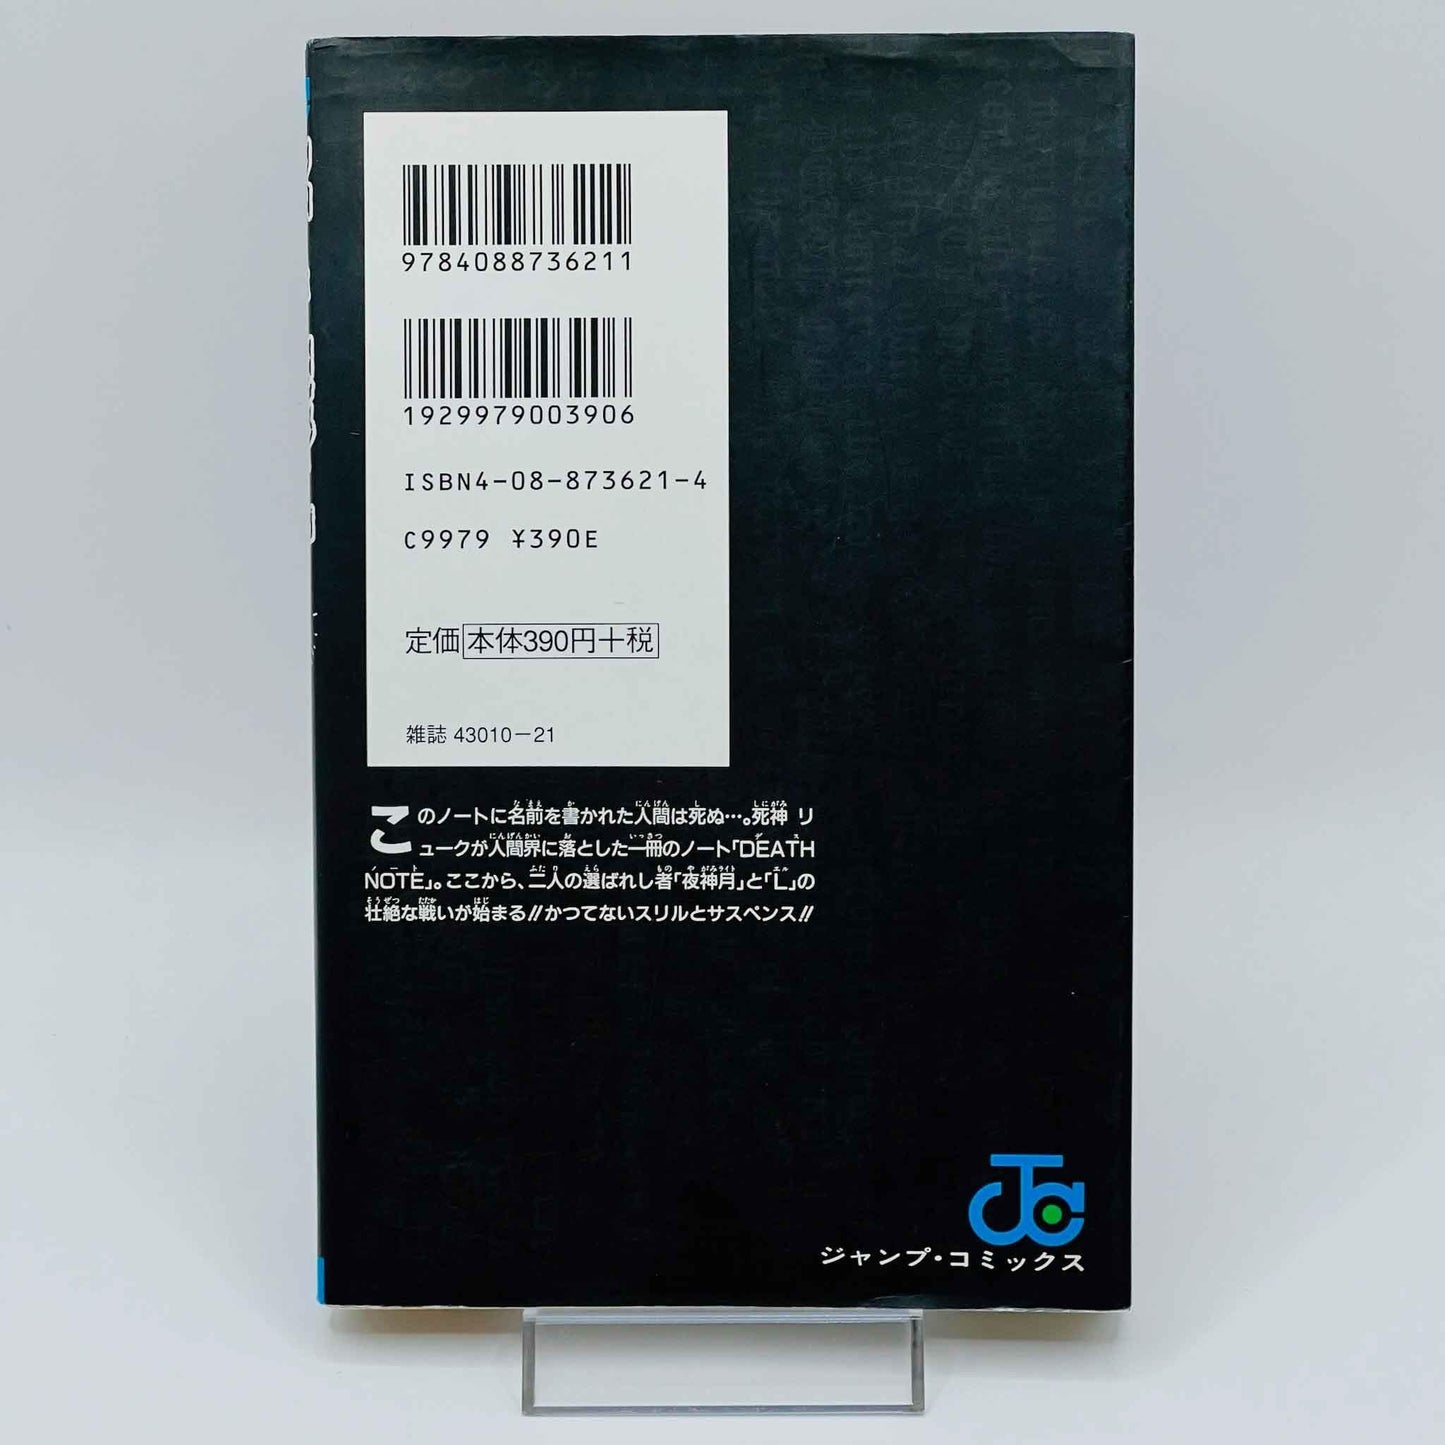 Death Note - Volume 01 - 1stPrint.net - 1st First Print Edition Manga Store - M-DN-01-003